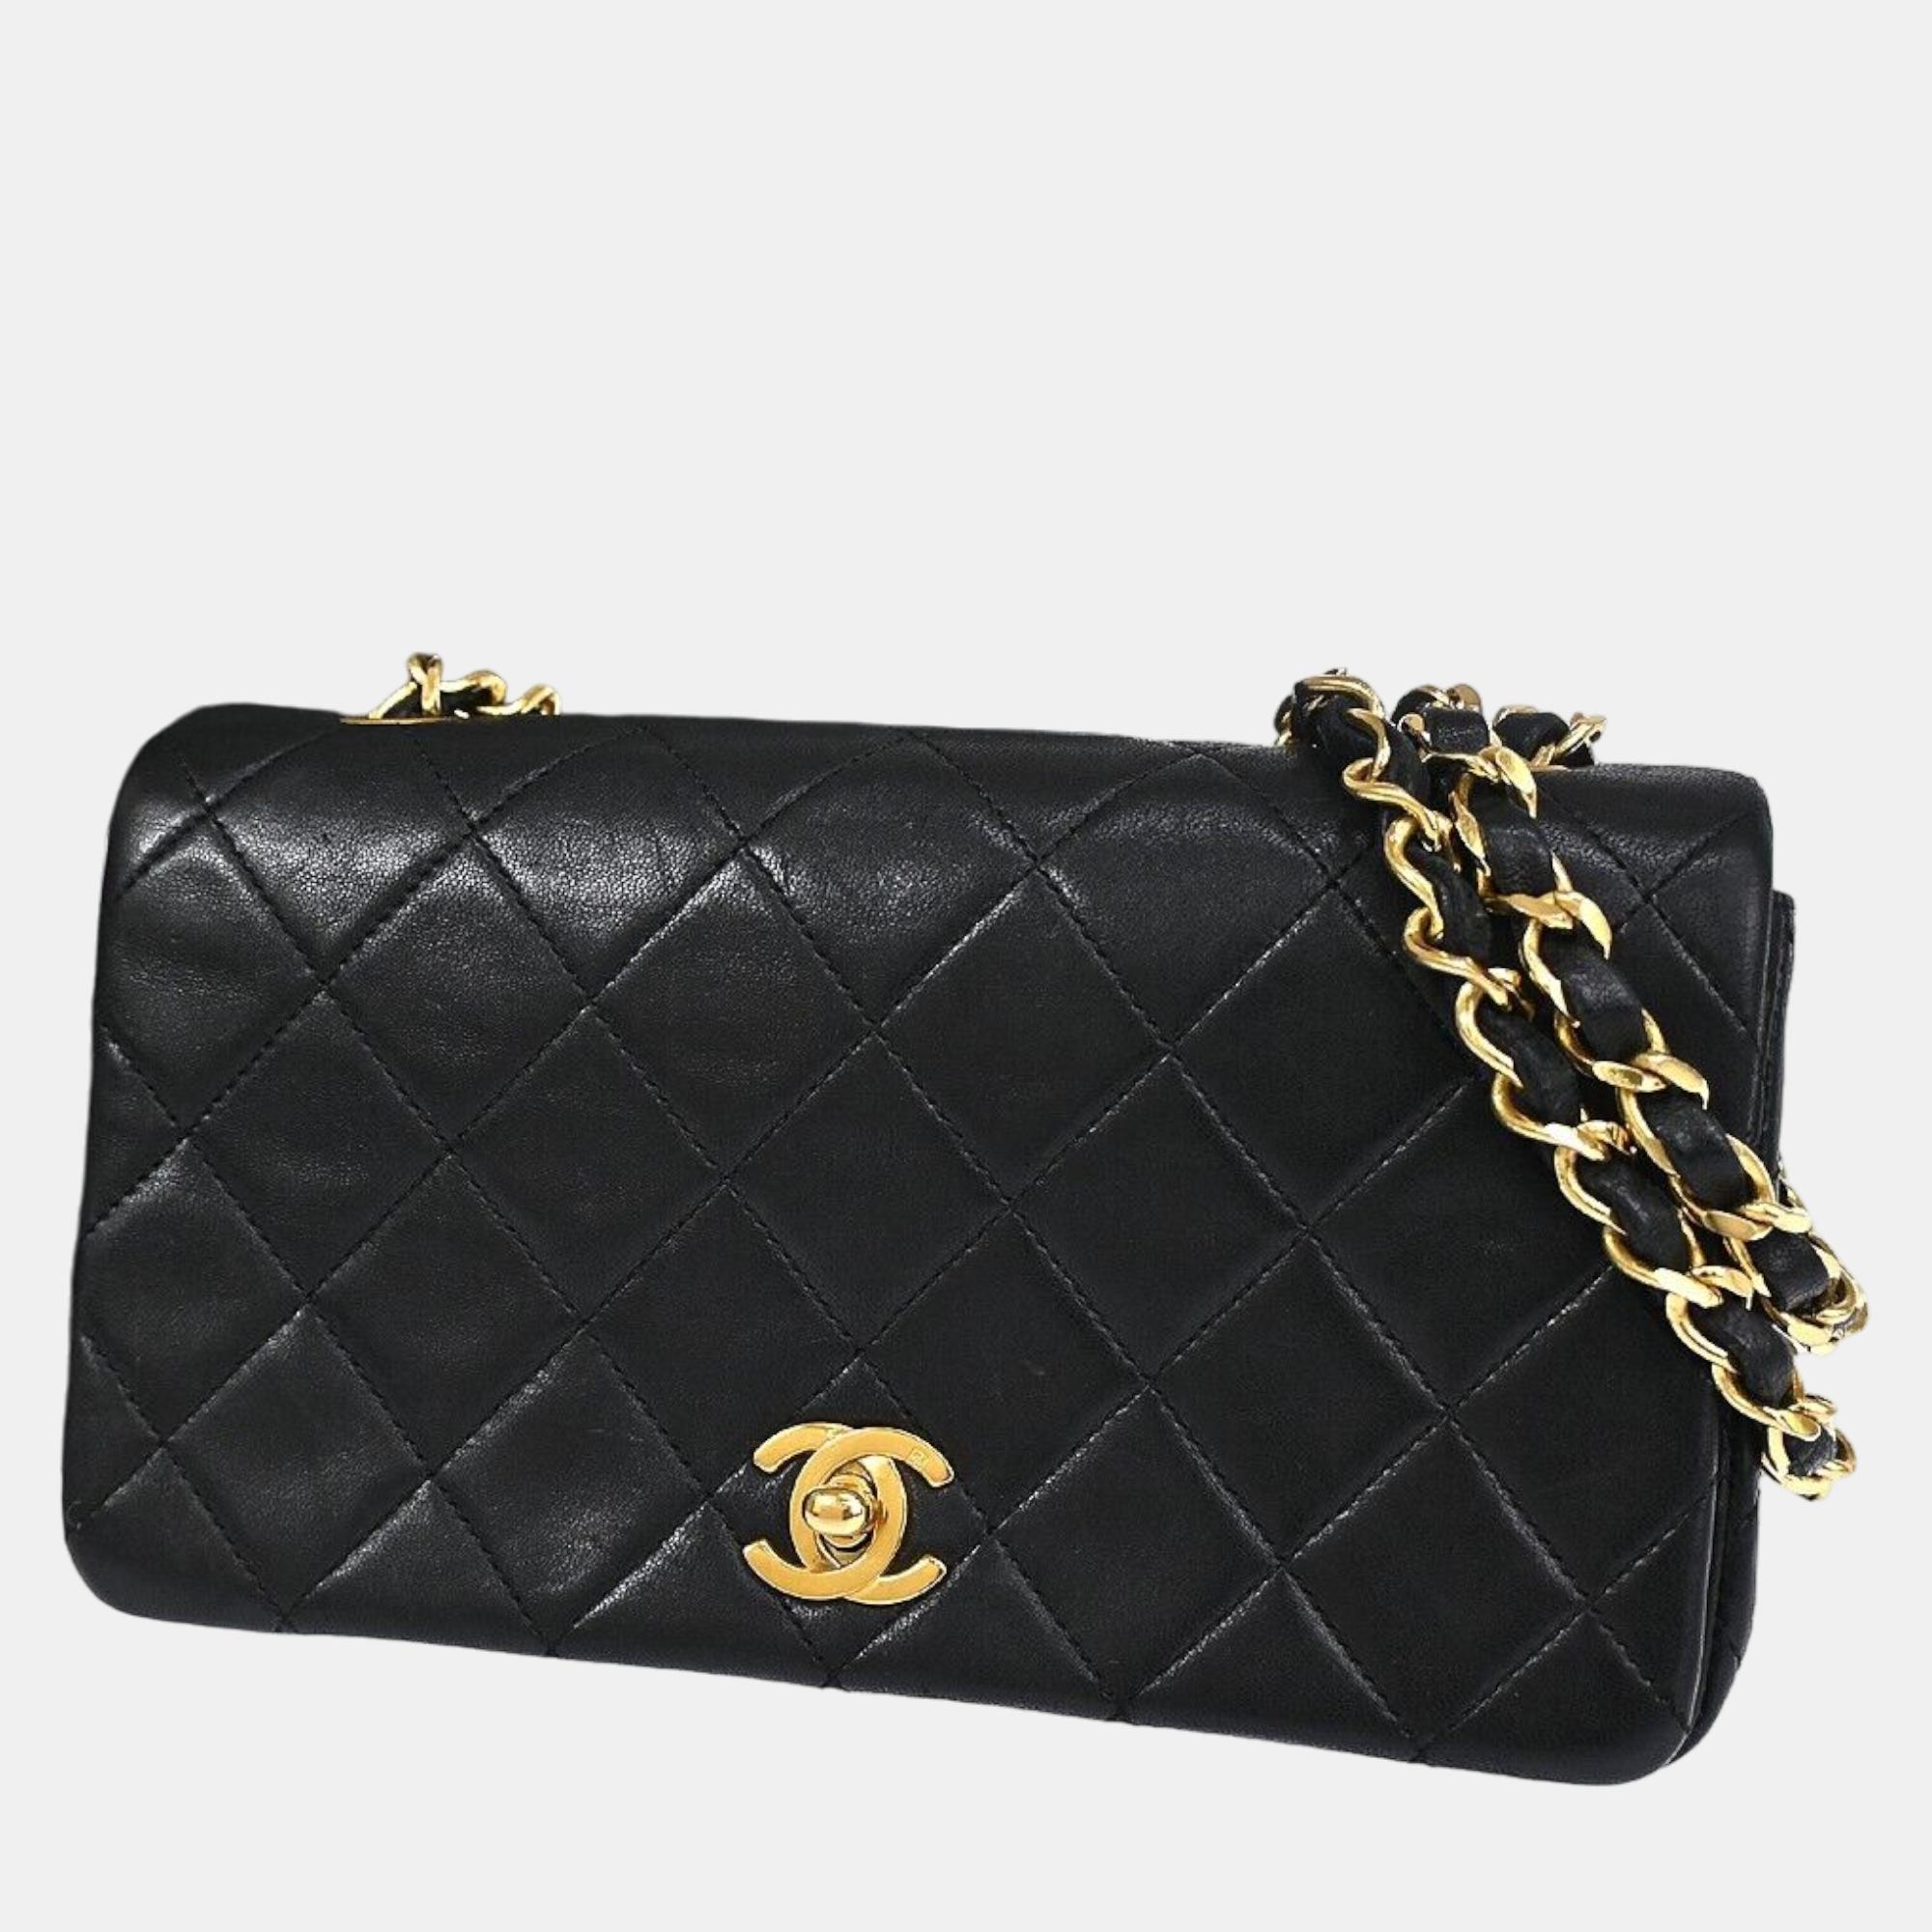 Chanel black leather cc turnlock full flap bag